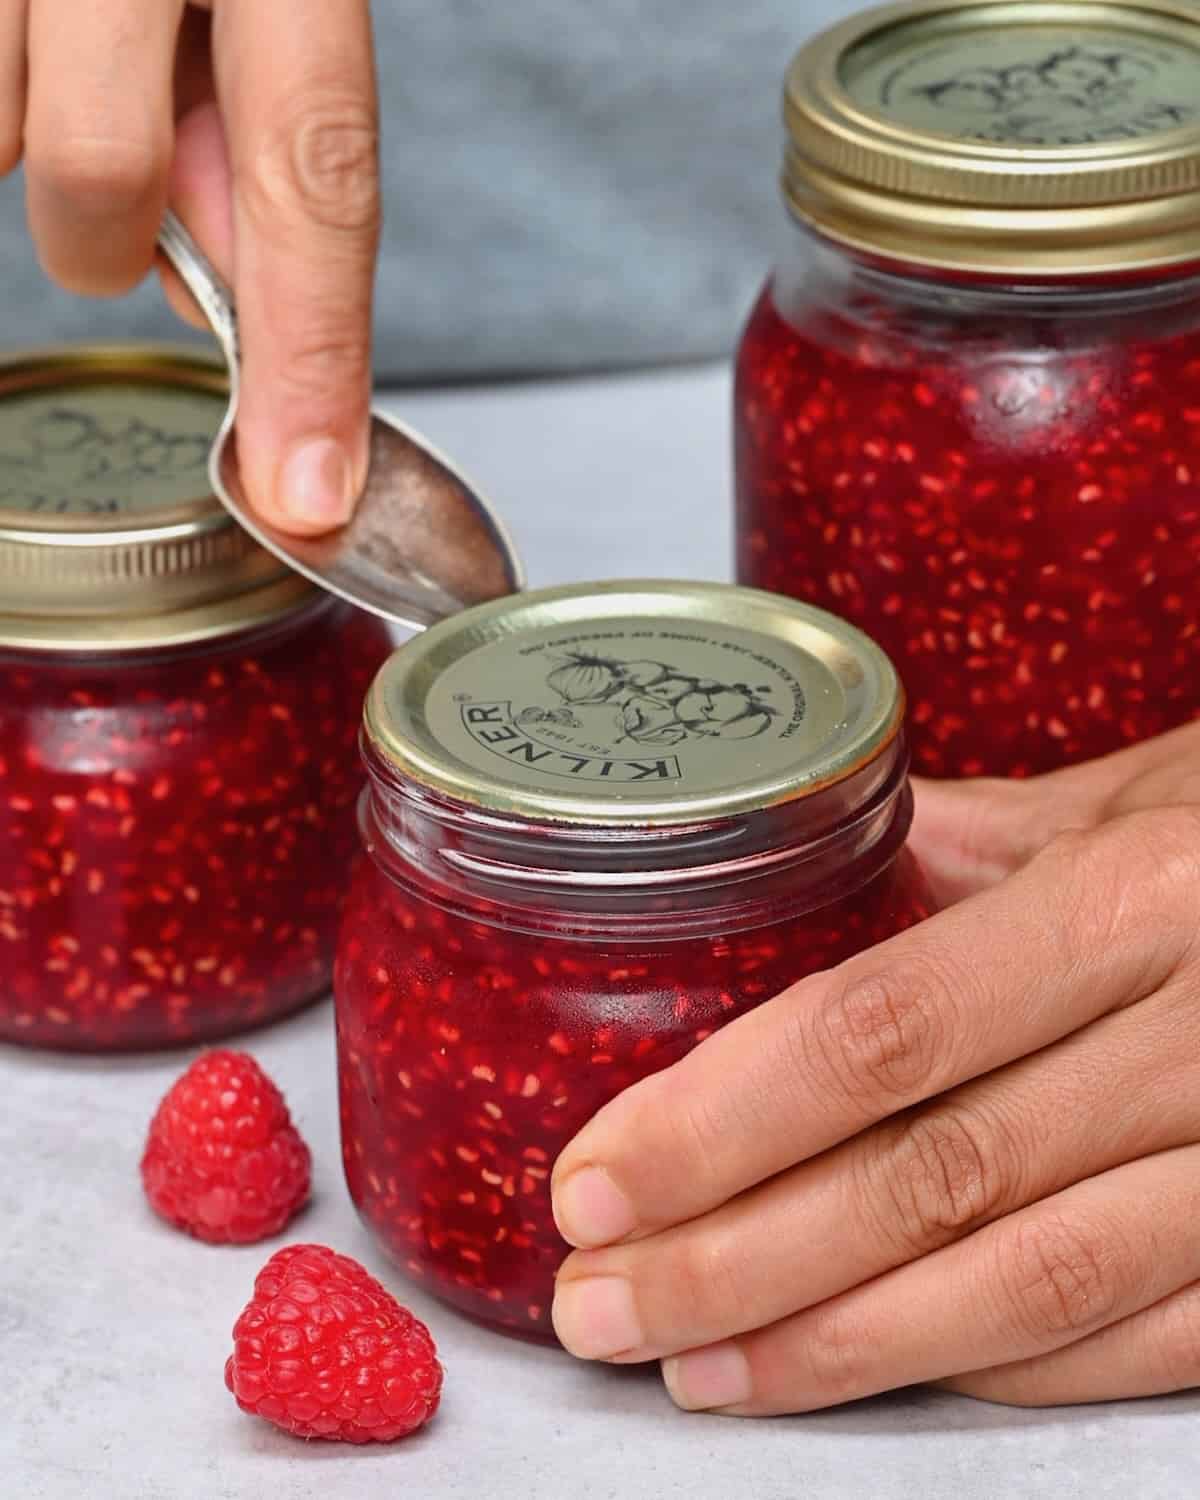 Opening a jar of homemade jam